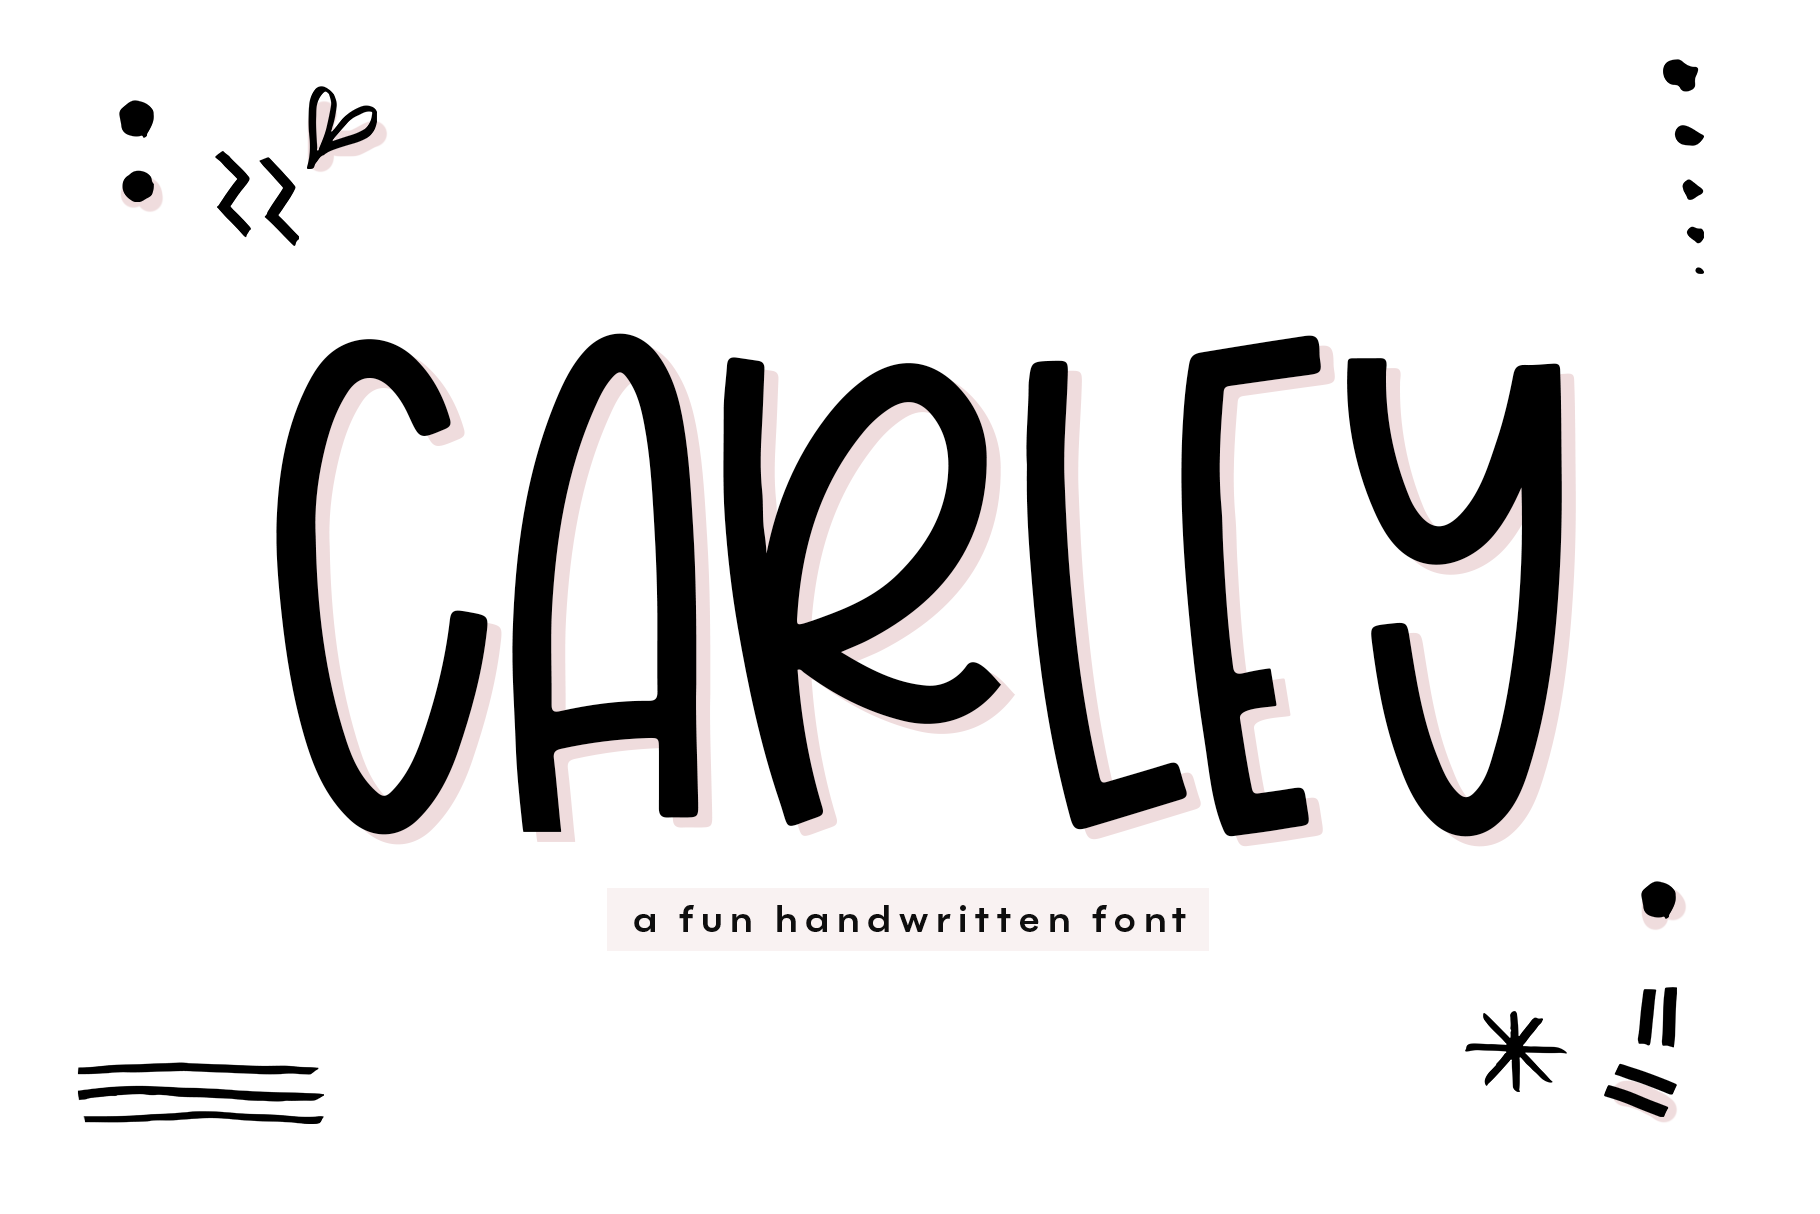 Carley Quirky Handwritten Font By Ka Designs Thehungryjpeg Com